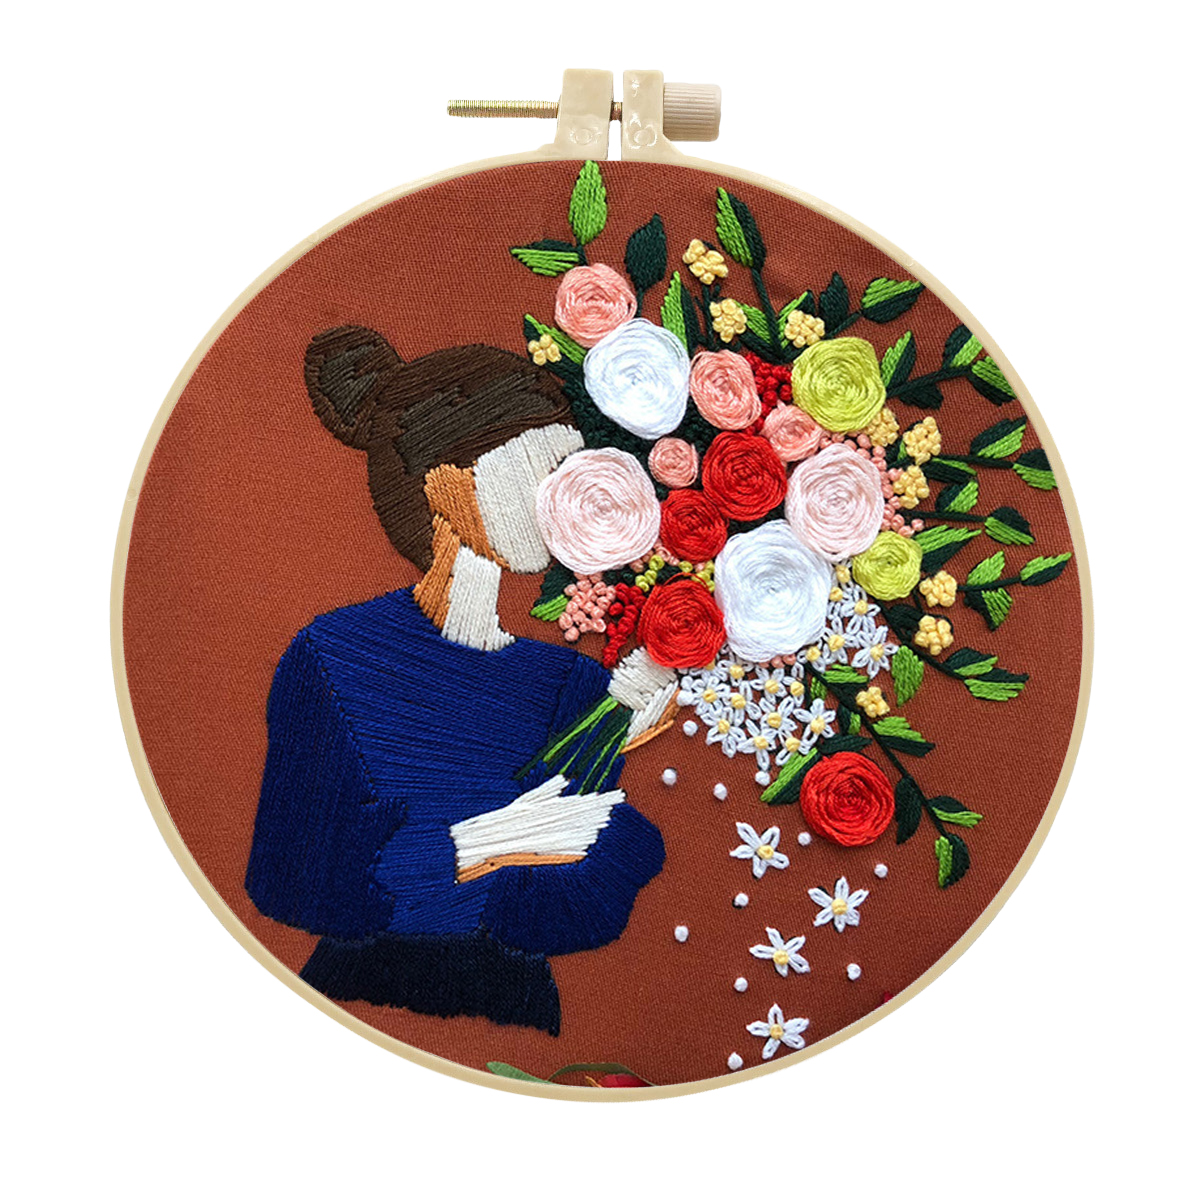 DIY Handmade Embroidery Kit Craft Cross Stitch Kits Beginner - Girl with Rose Pattern